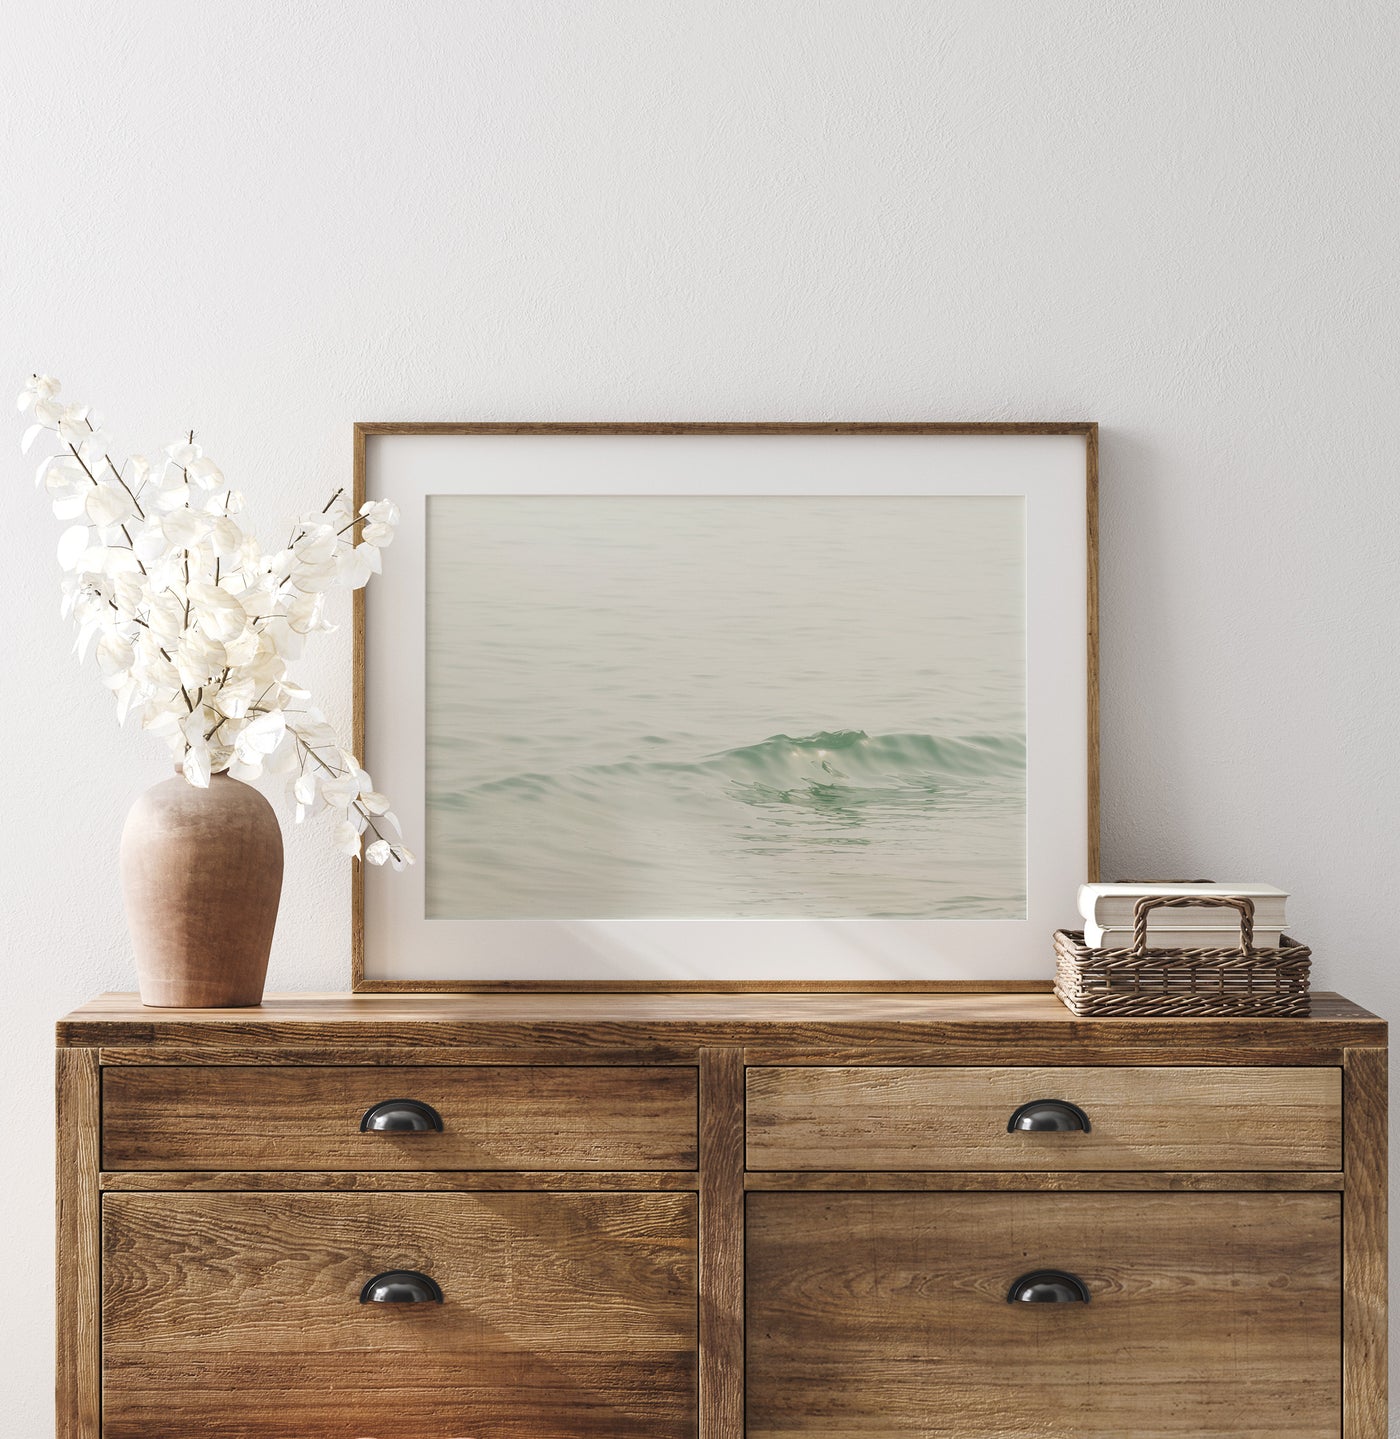 Ocean Waves No 7 - Fine art print by Cattie Coyle Photography on dresser